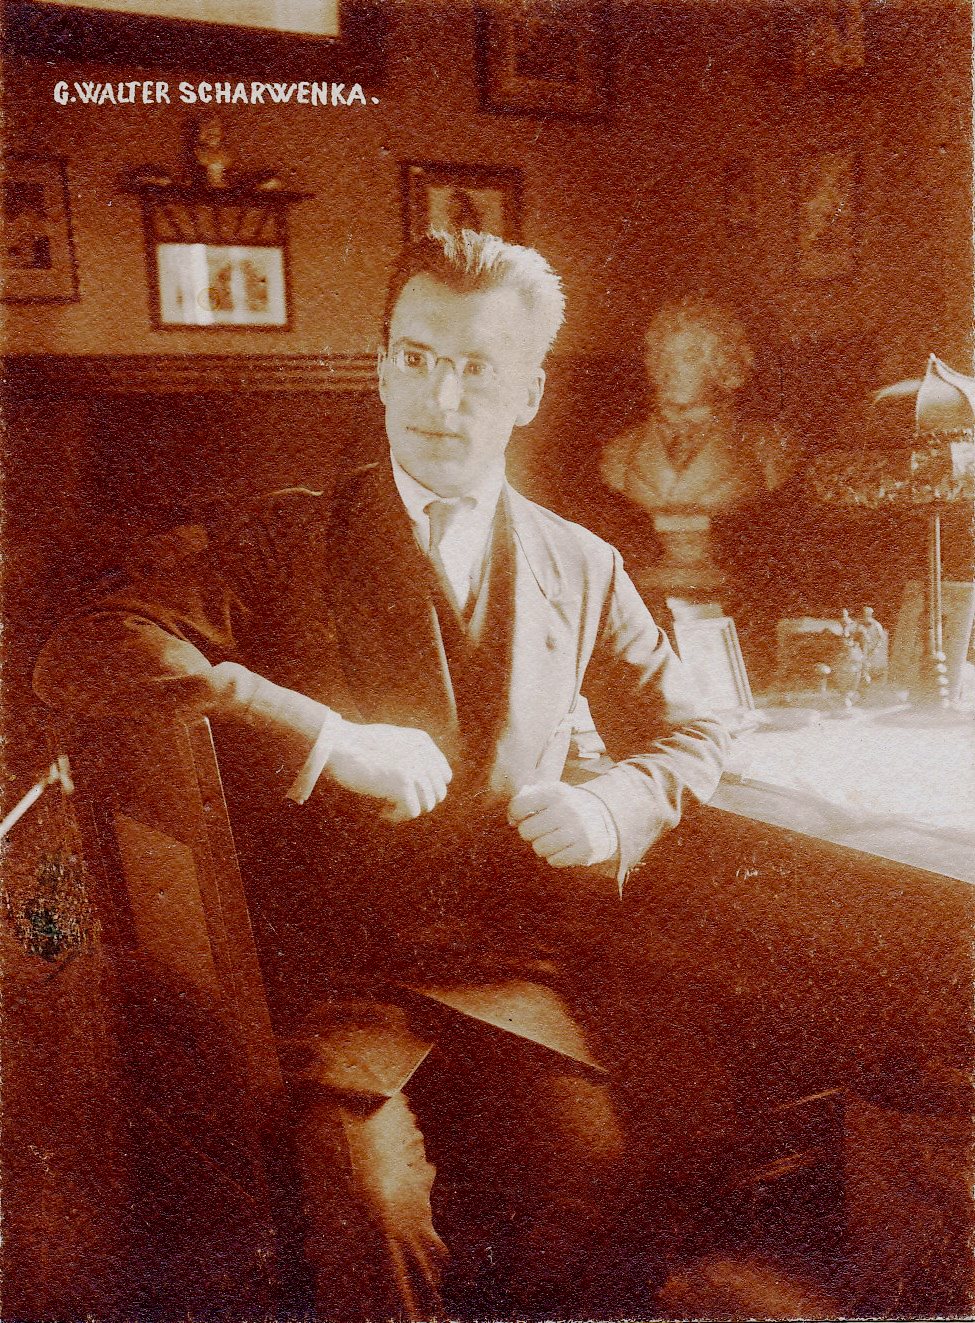 1909 w scharwenka ws muskerlexikon